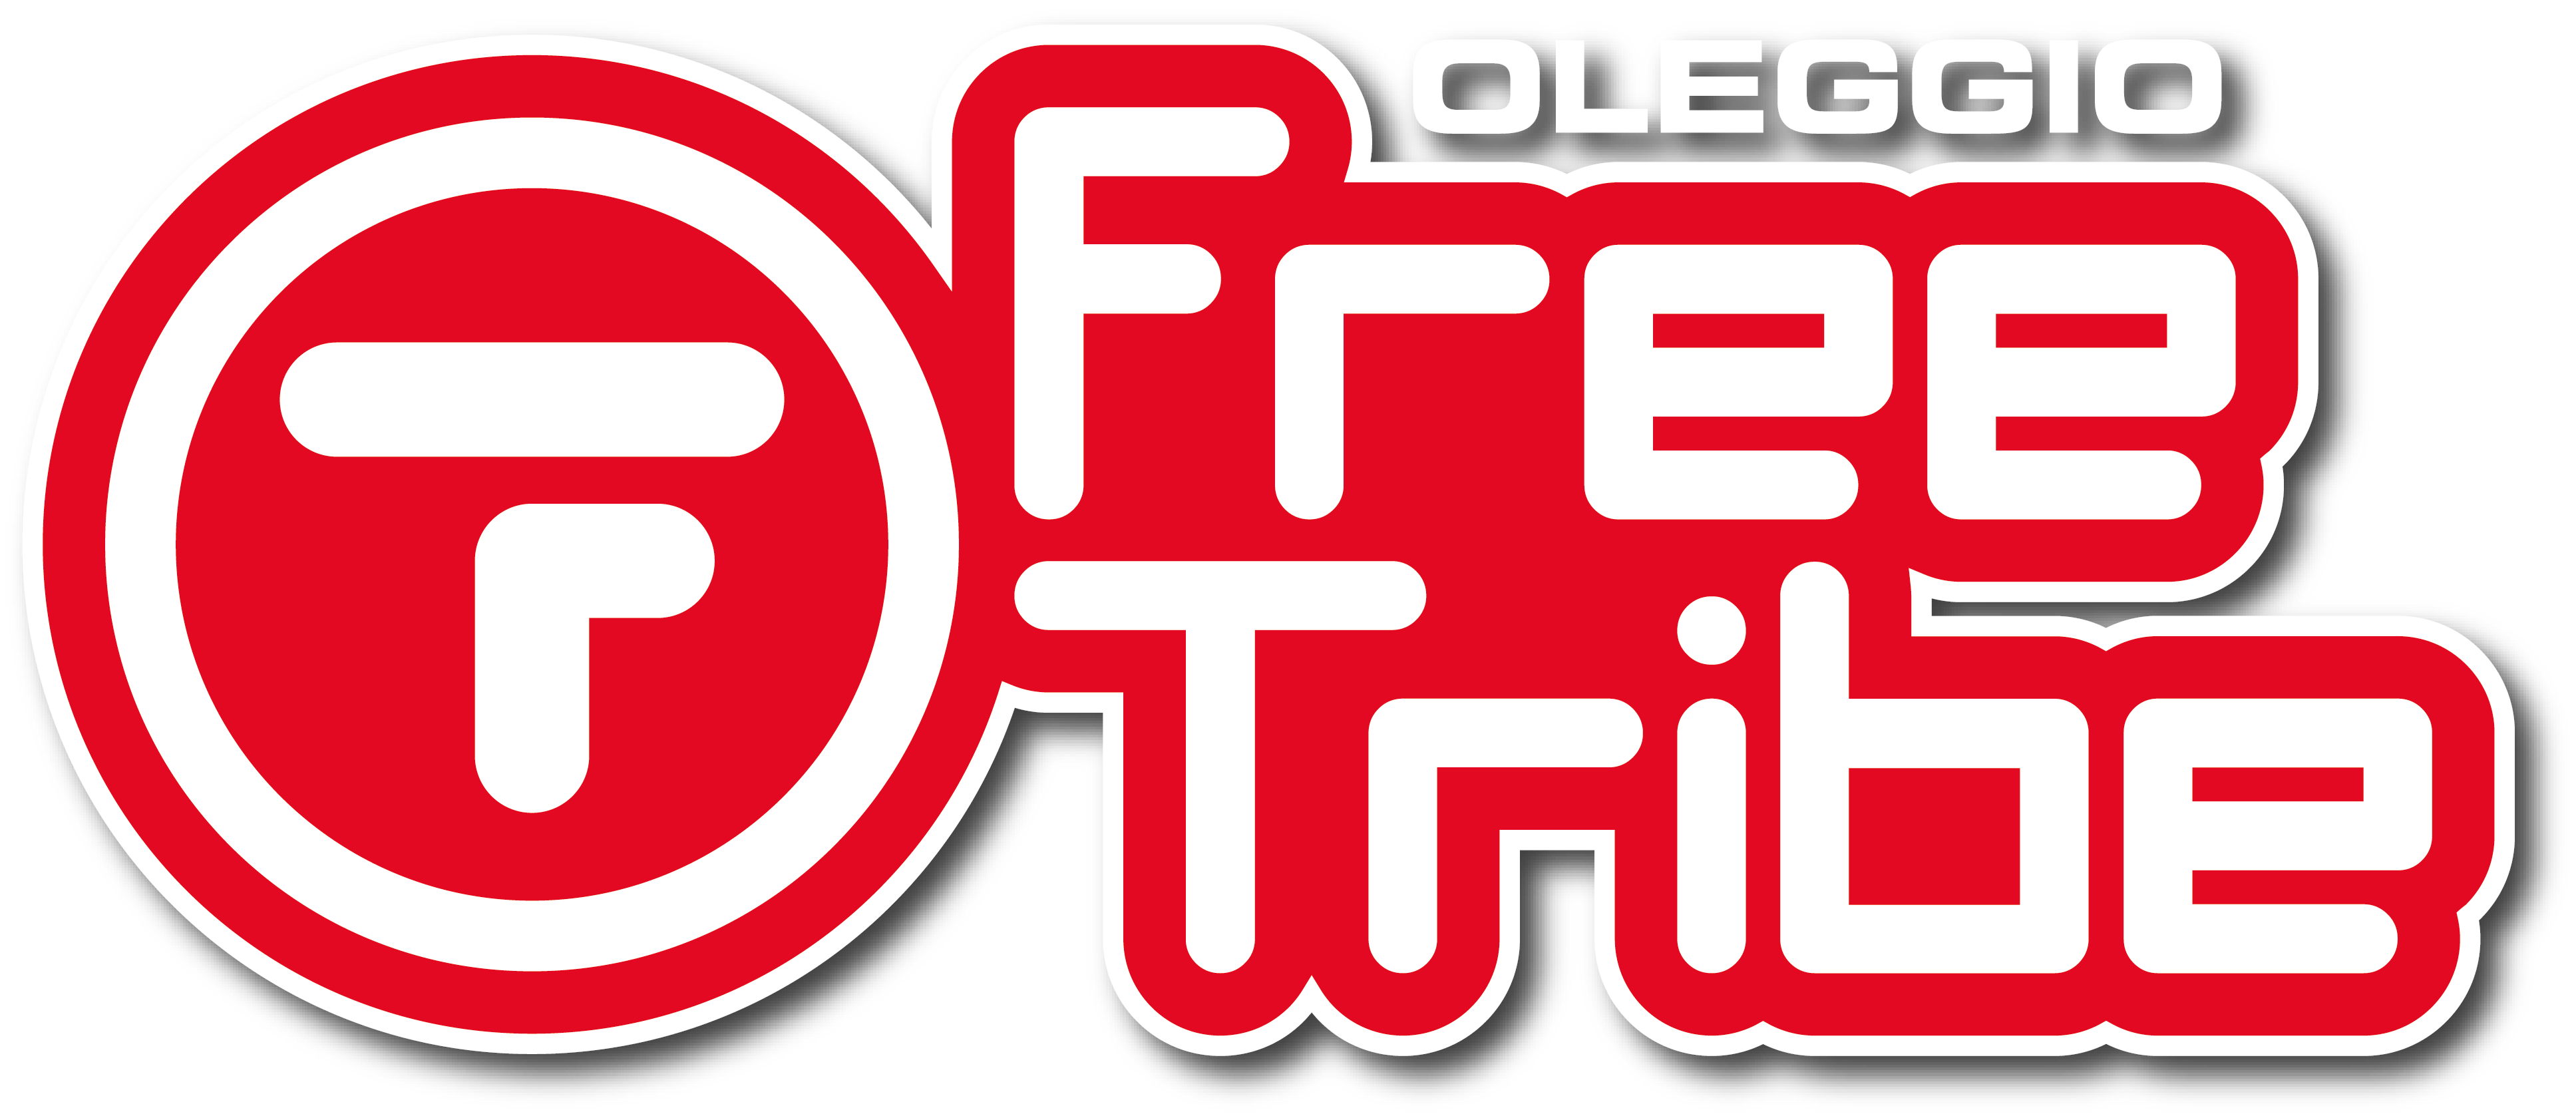 logo freetribe oleggio Aps